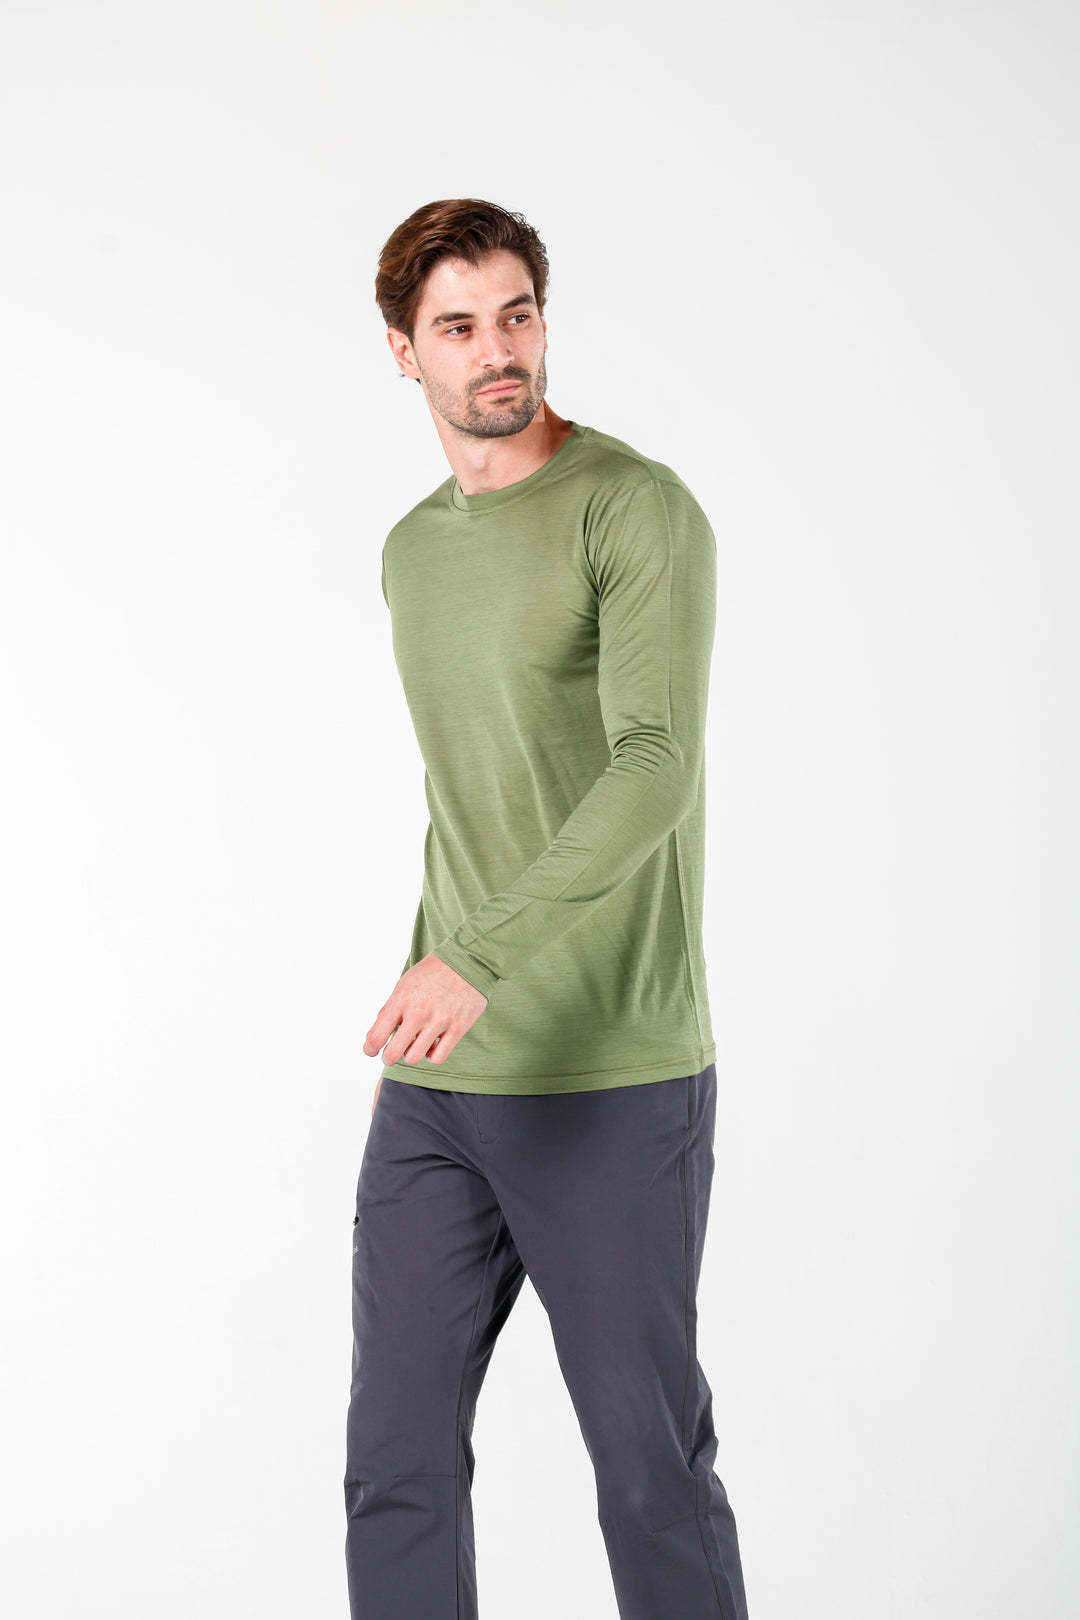 ERIS- Aktivni veš  Cool wool 100% merino vuna majica dugi rukav